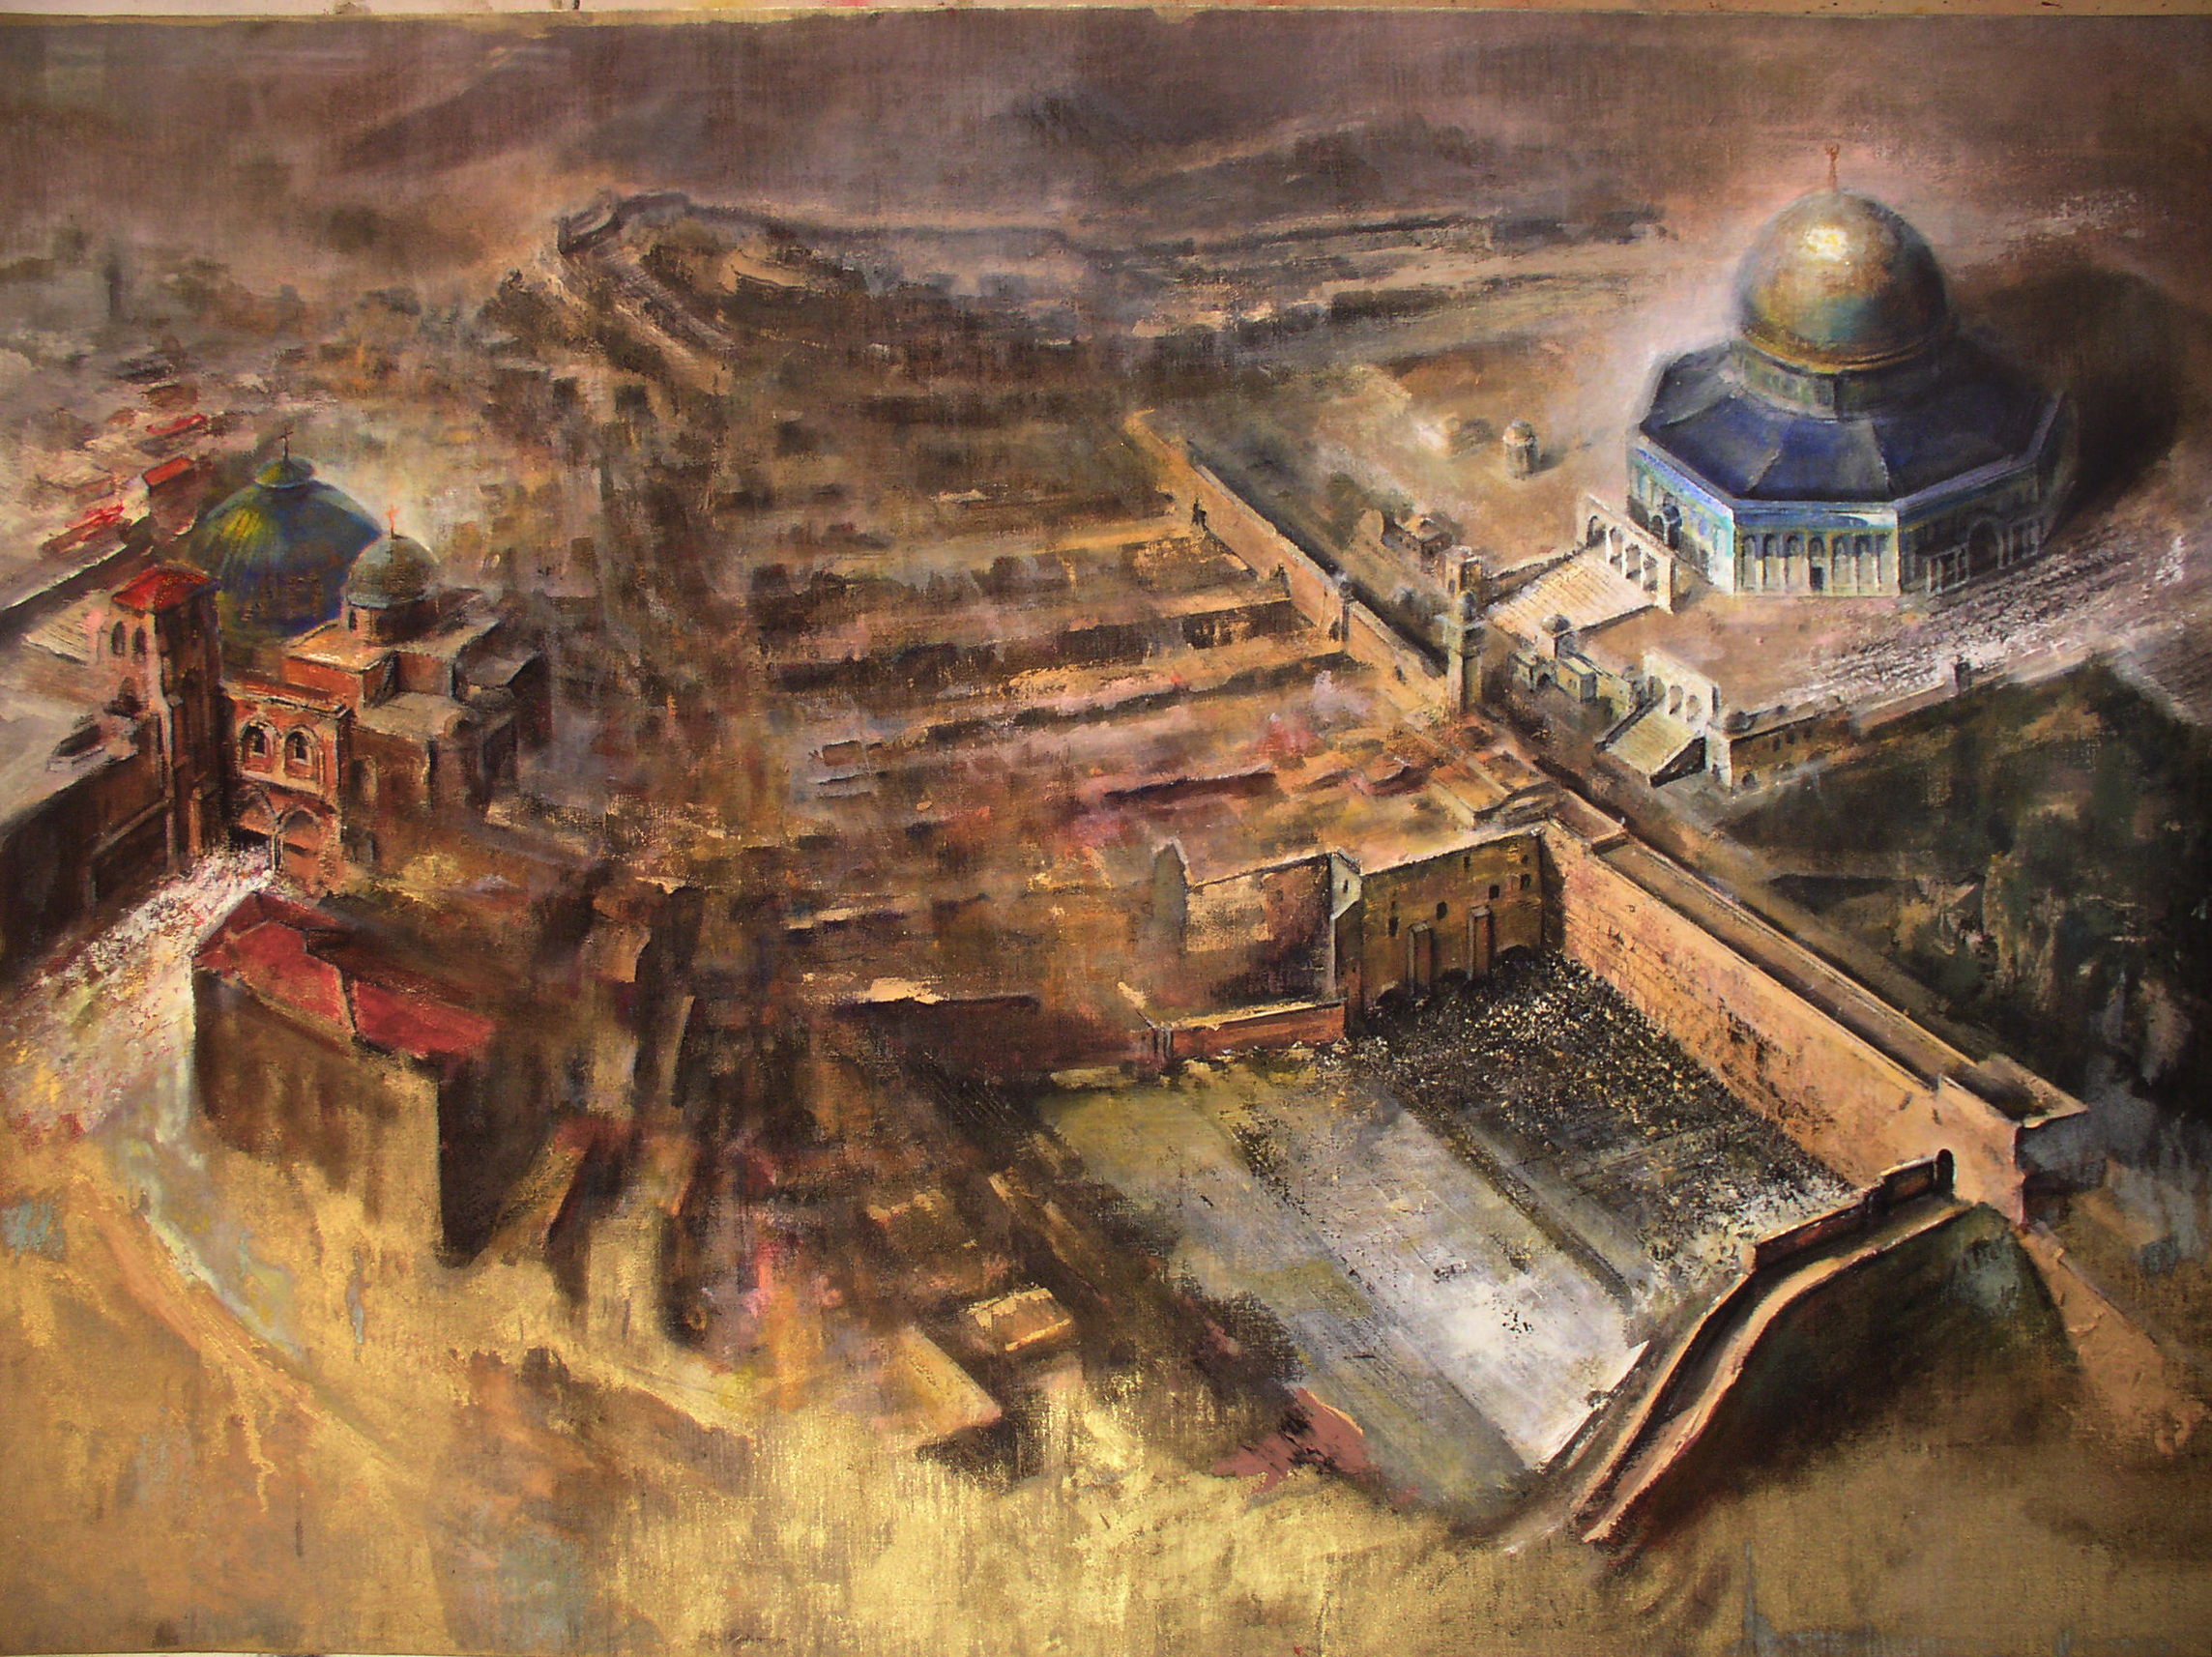 Gerusalemme-le tre religioni monoteiste -santosuosso 2003- 100x140